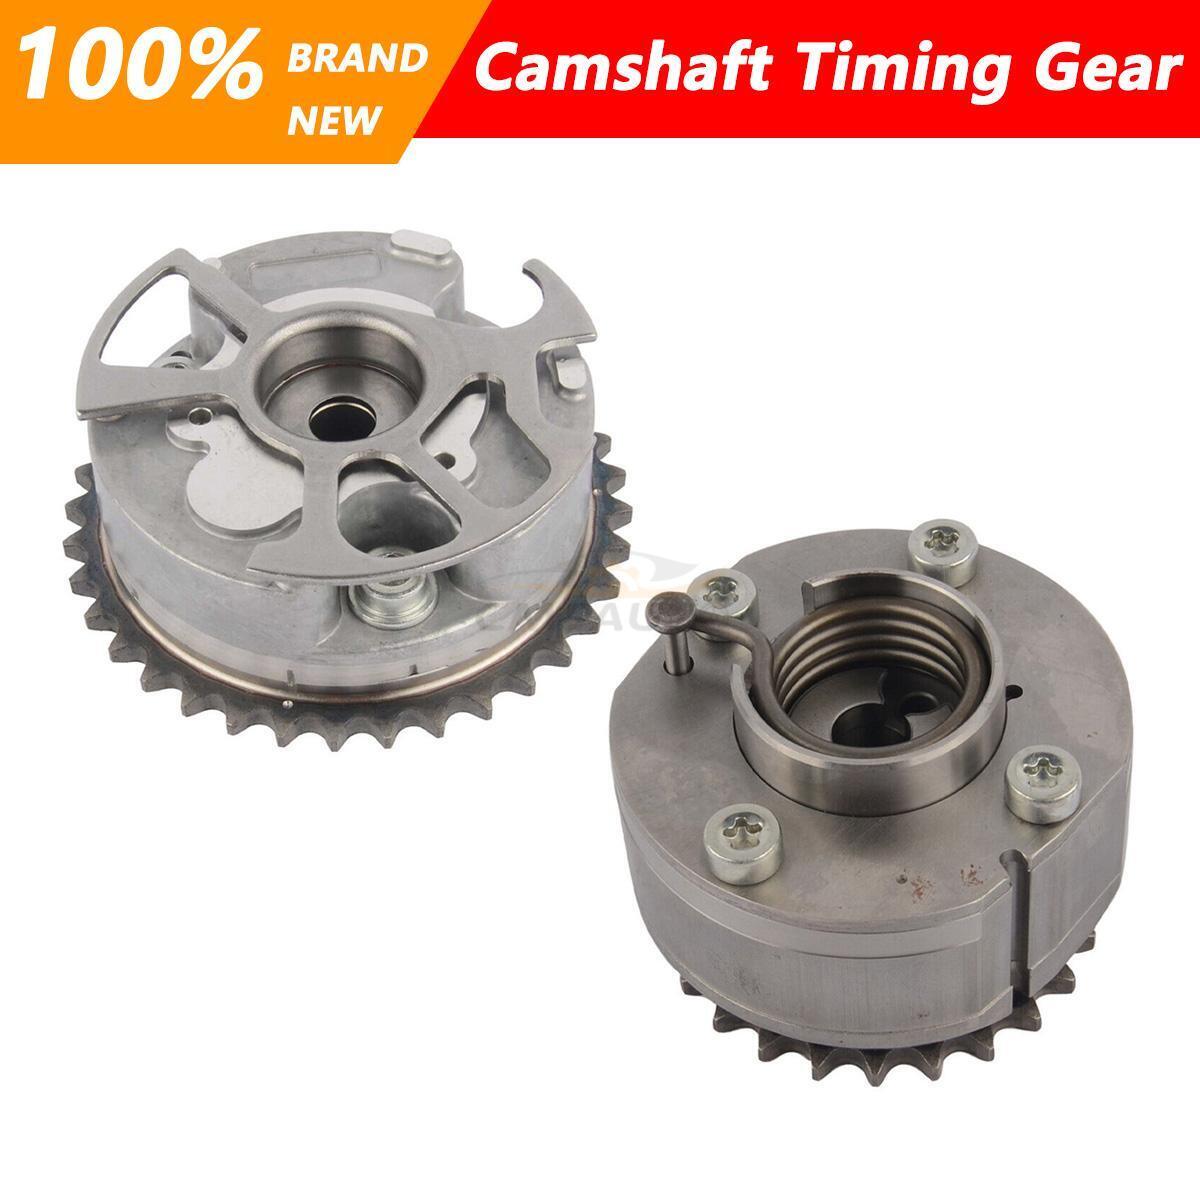 2x Camshaft Timing Gear Sprockets for Toyota Highlander Camry Lexus RX 350 ES350